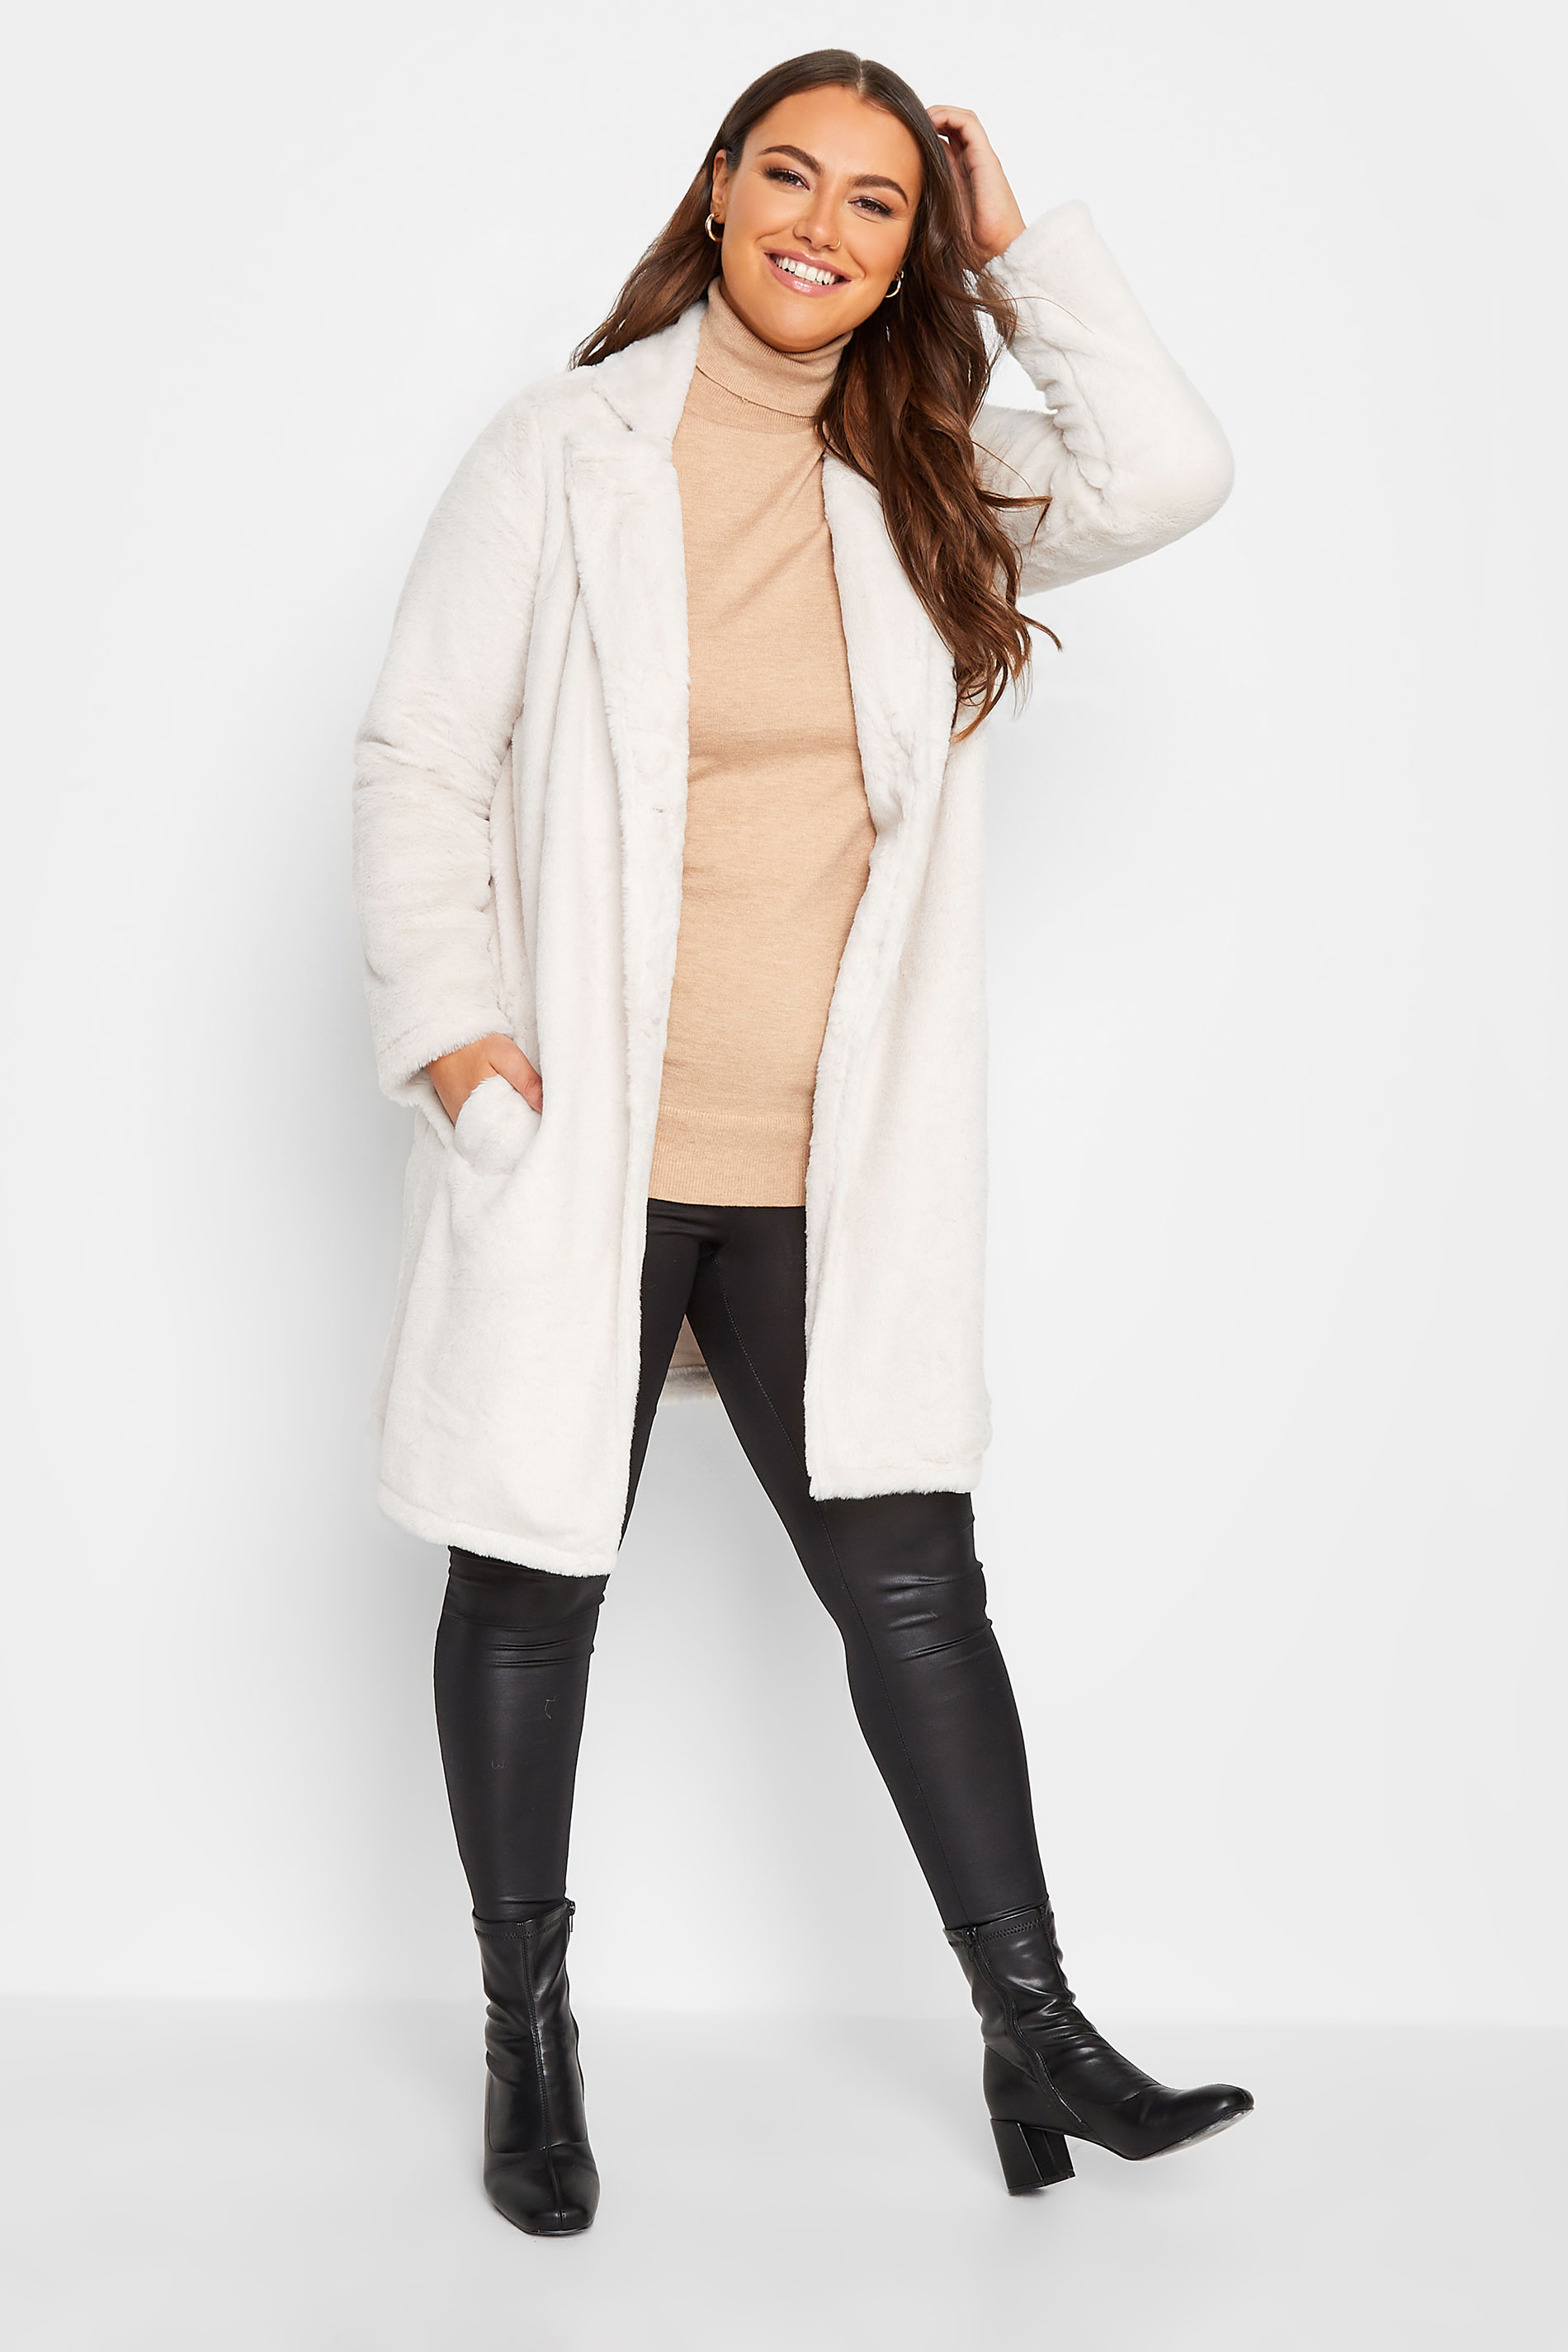 YOURS Plus Size Curve Cream Faux Fur Coat | Yours Clothing  2